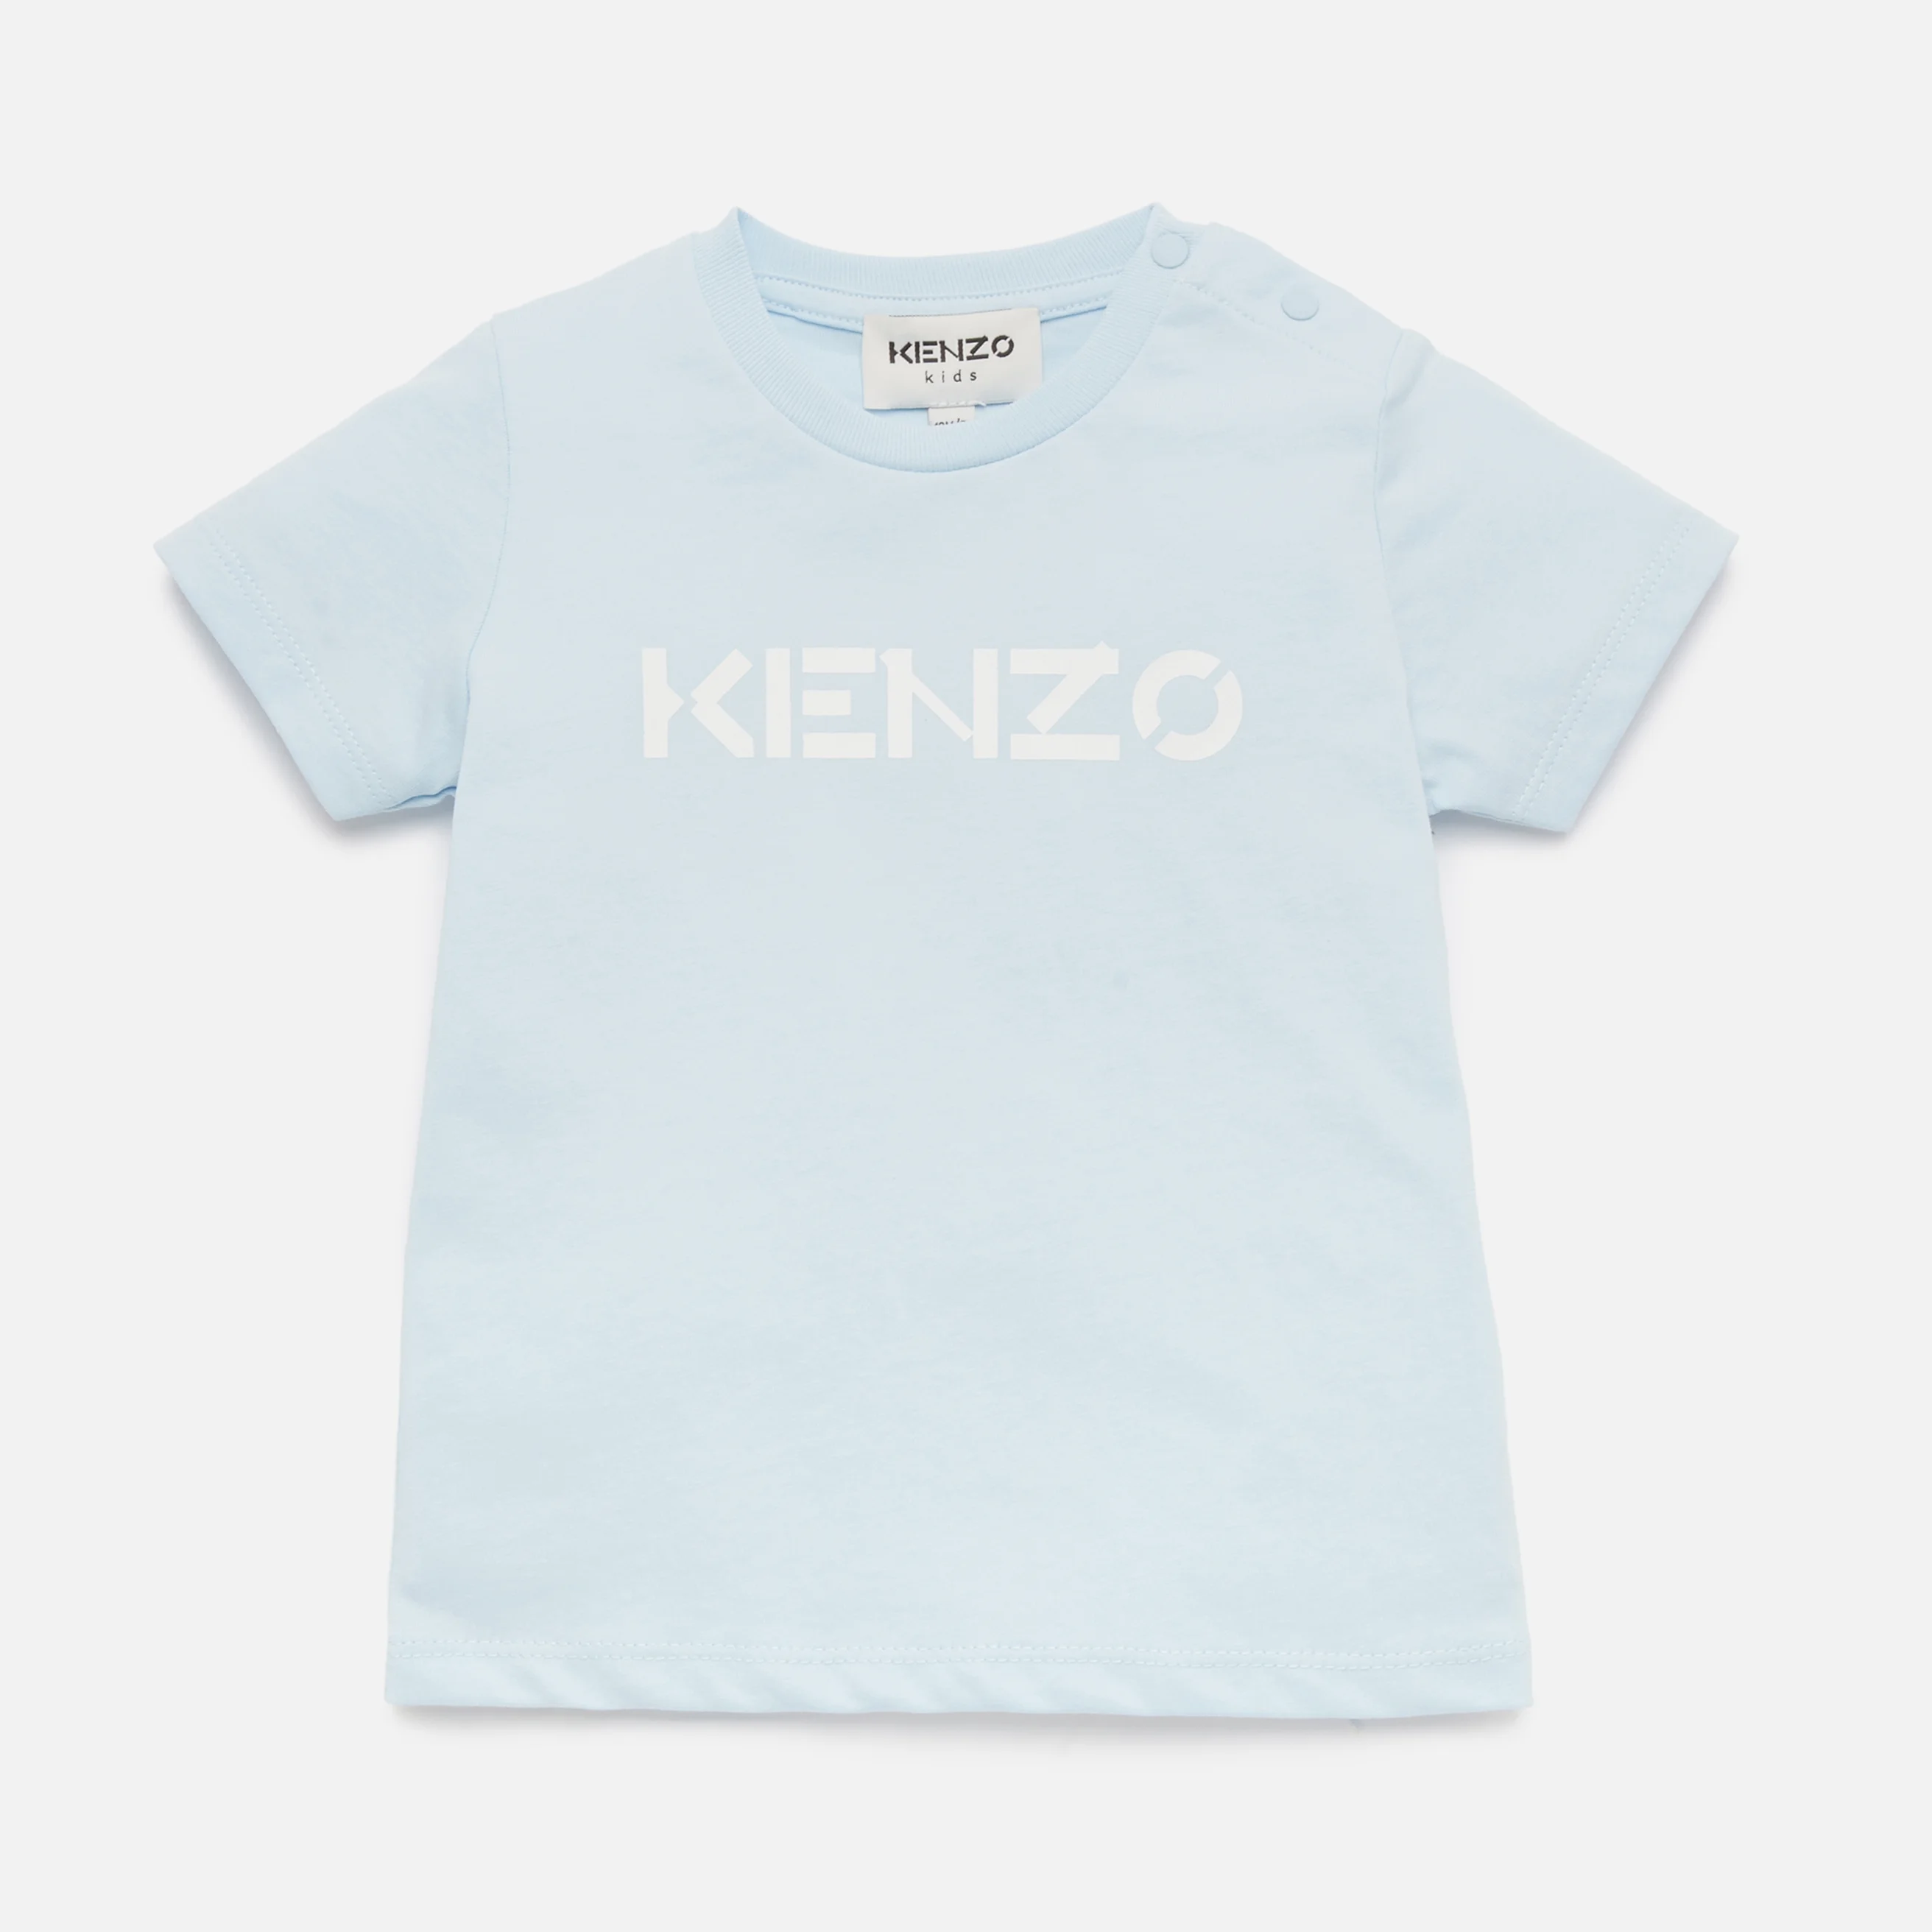 KENZO Toddlers' Logo T-Shirt - Light Blue Image 1